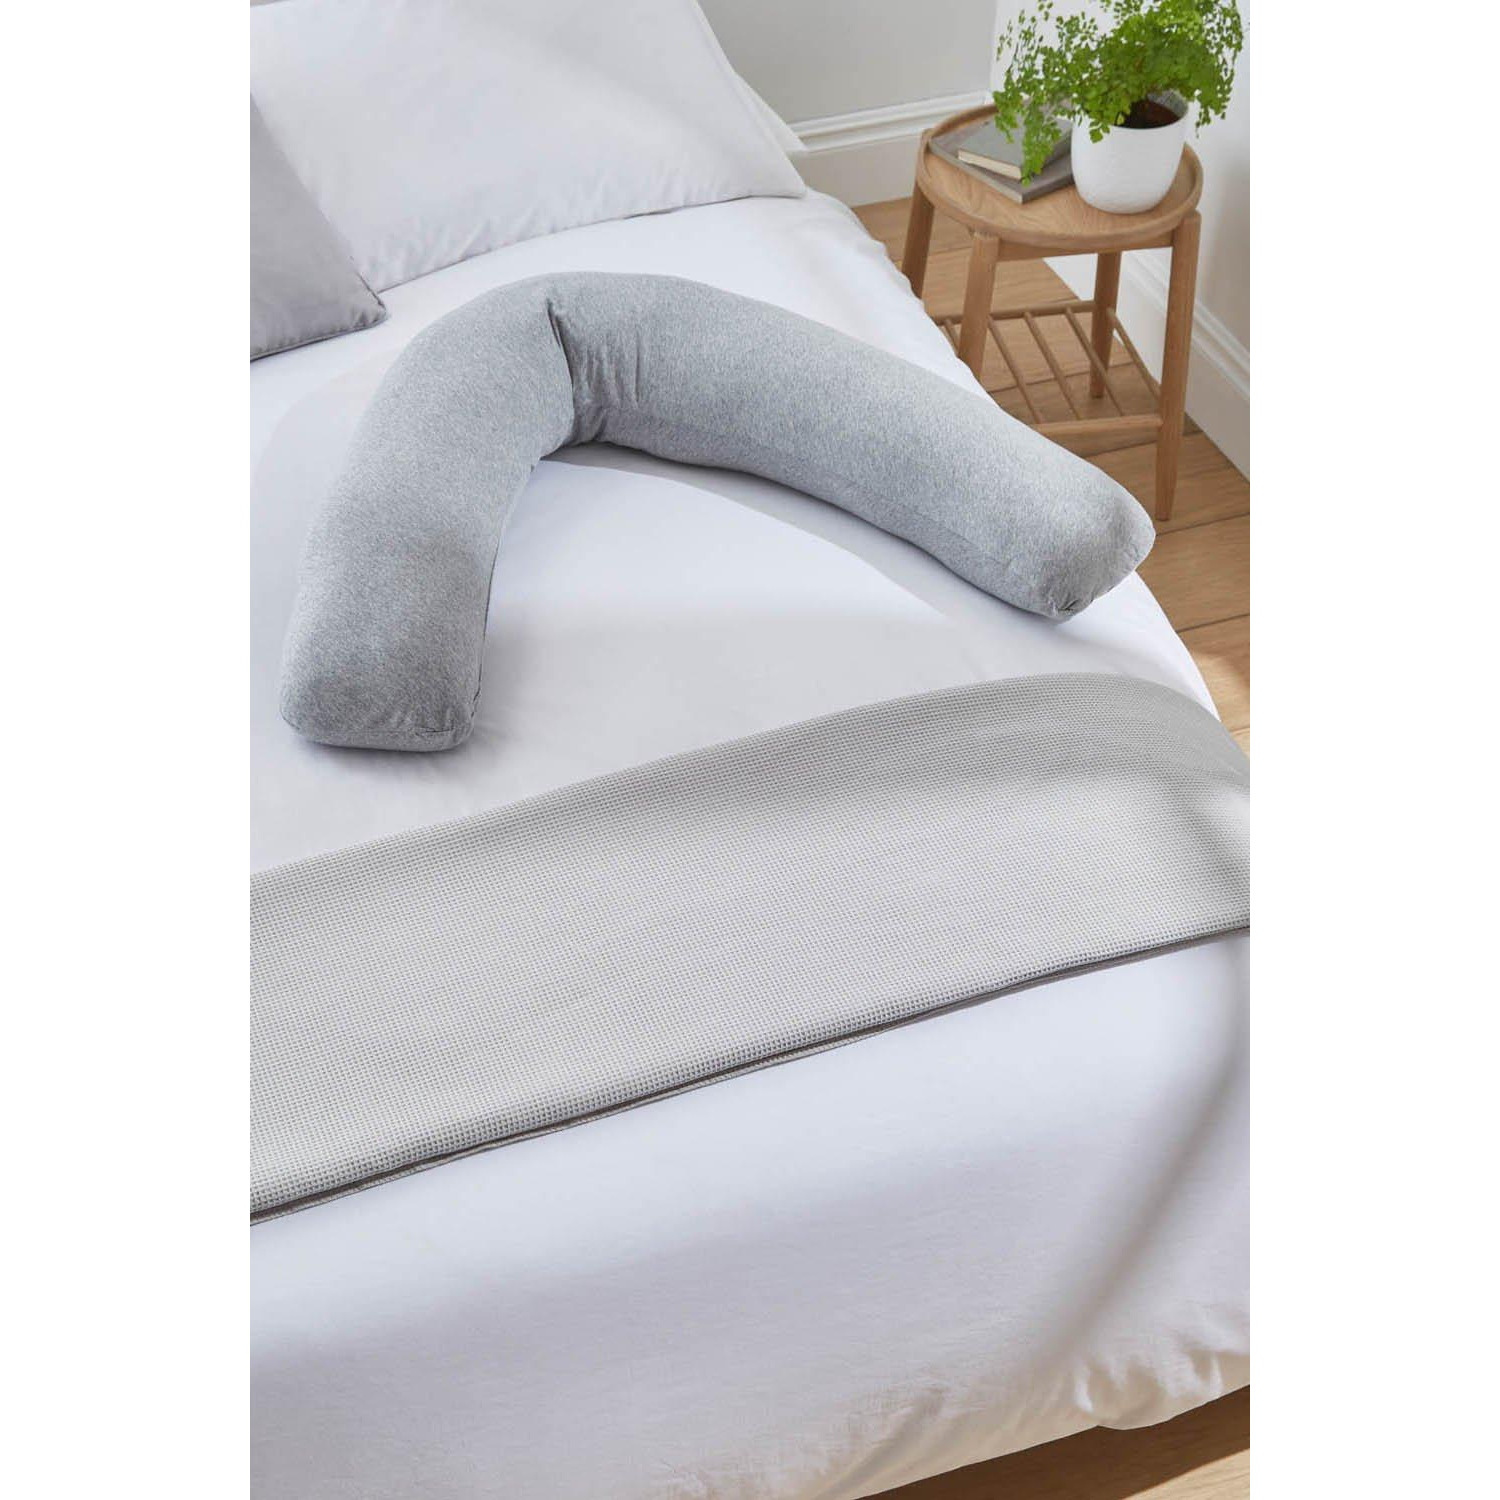 'Pregnancy & Nursing' Pillow Marl Grey - image 1